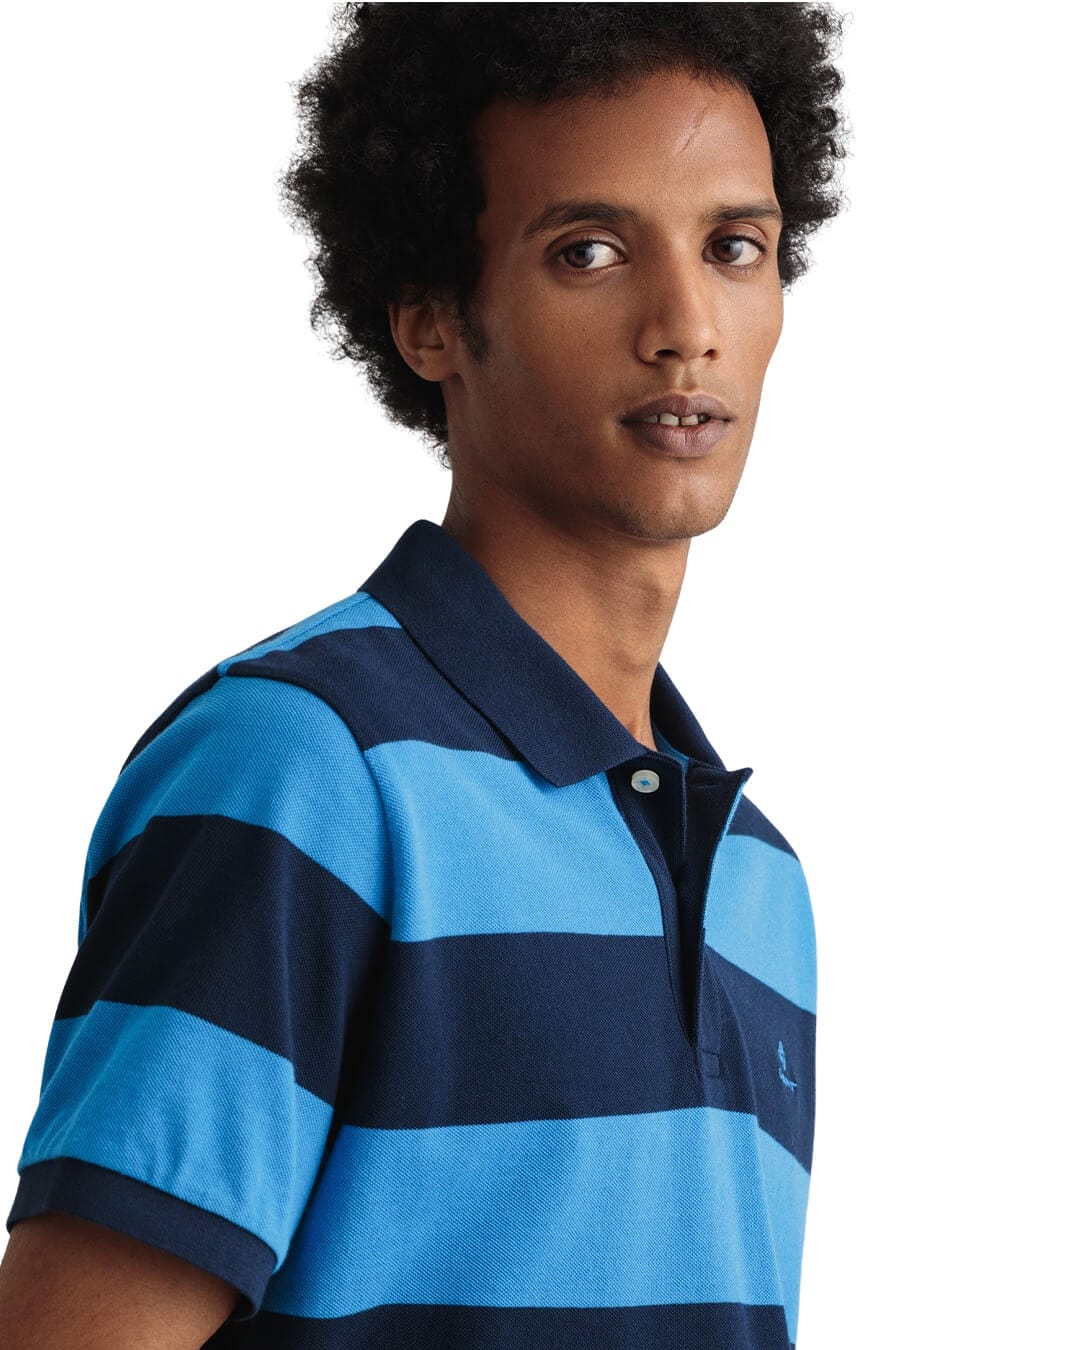 Gant Polo Shirts Gant Barstripe Pique Blue Polo Shirt